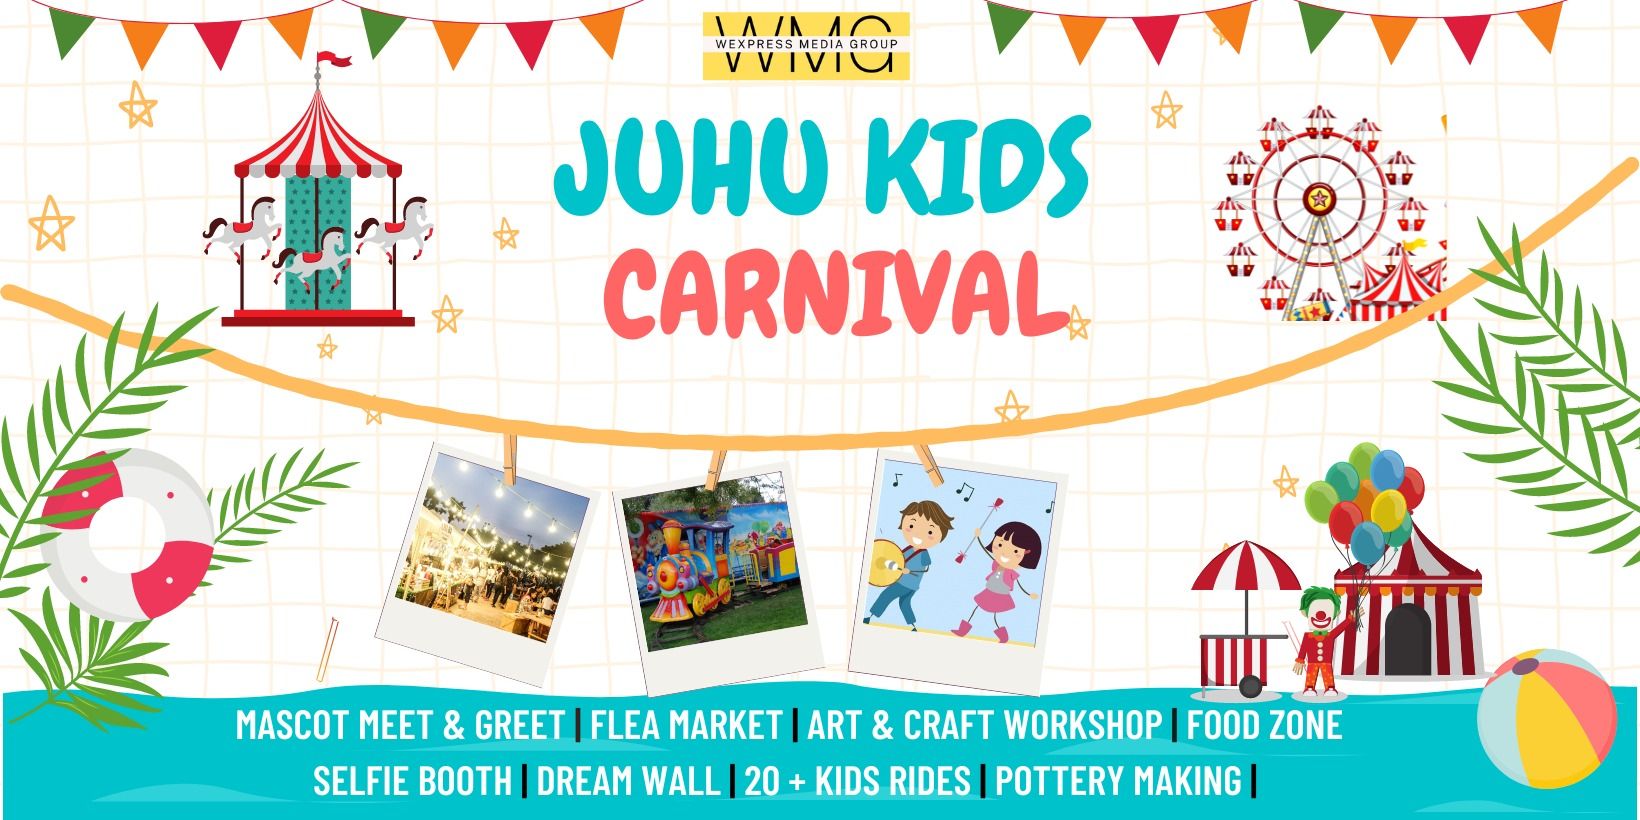 JUHU KIDS CARNIVAL kids Event Tickets Mumbai - BookMyShow